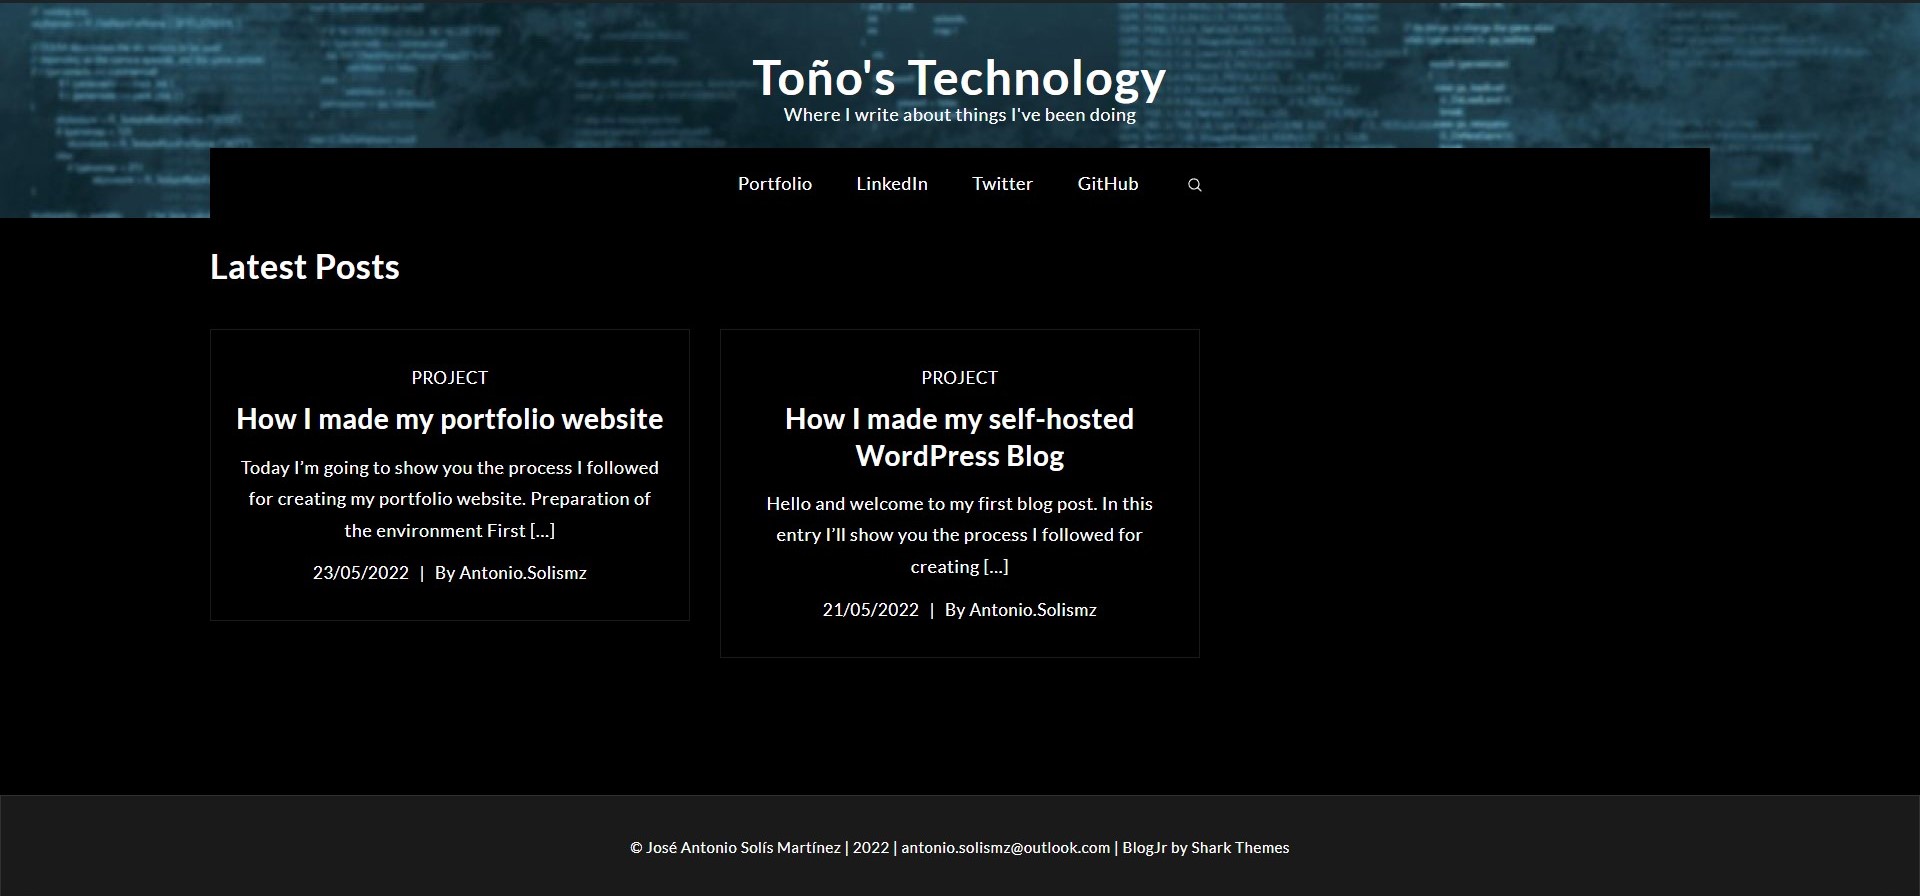 Main screen of the blog